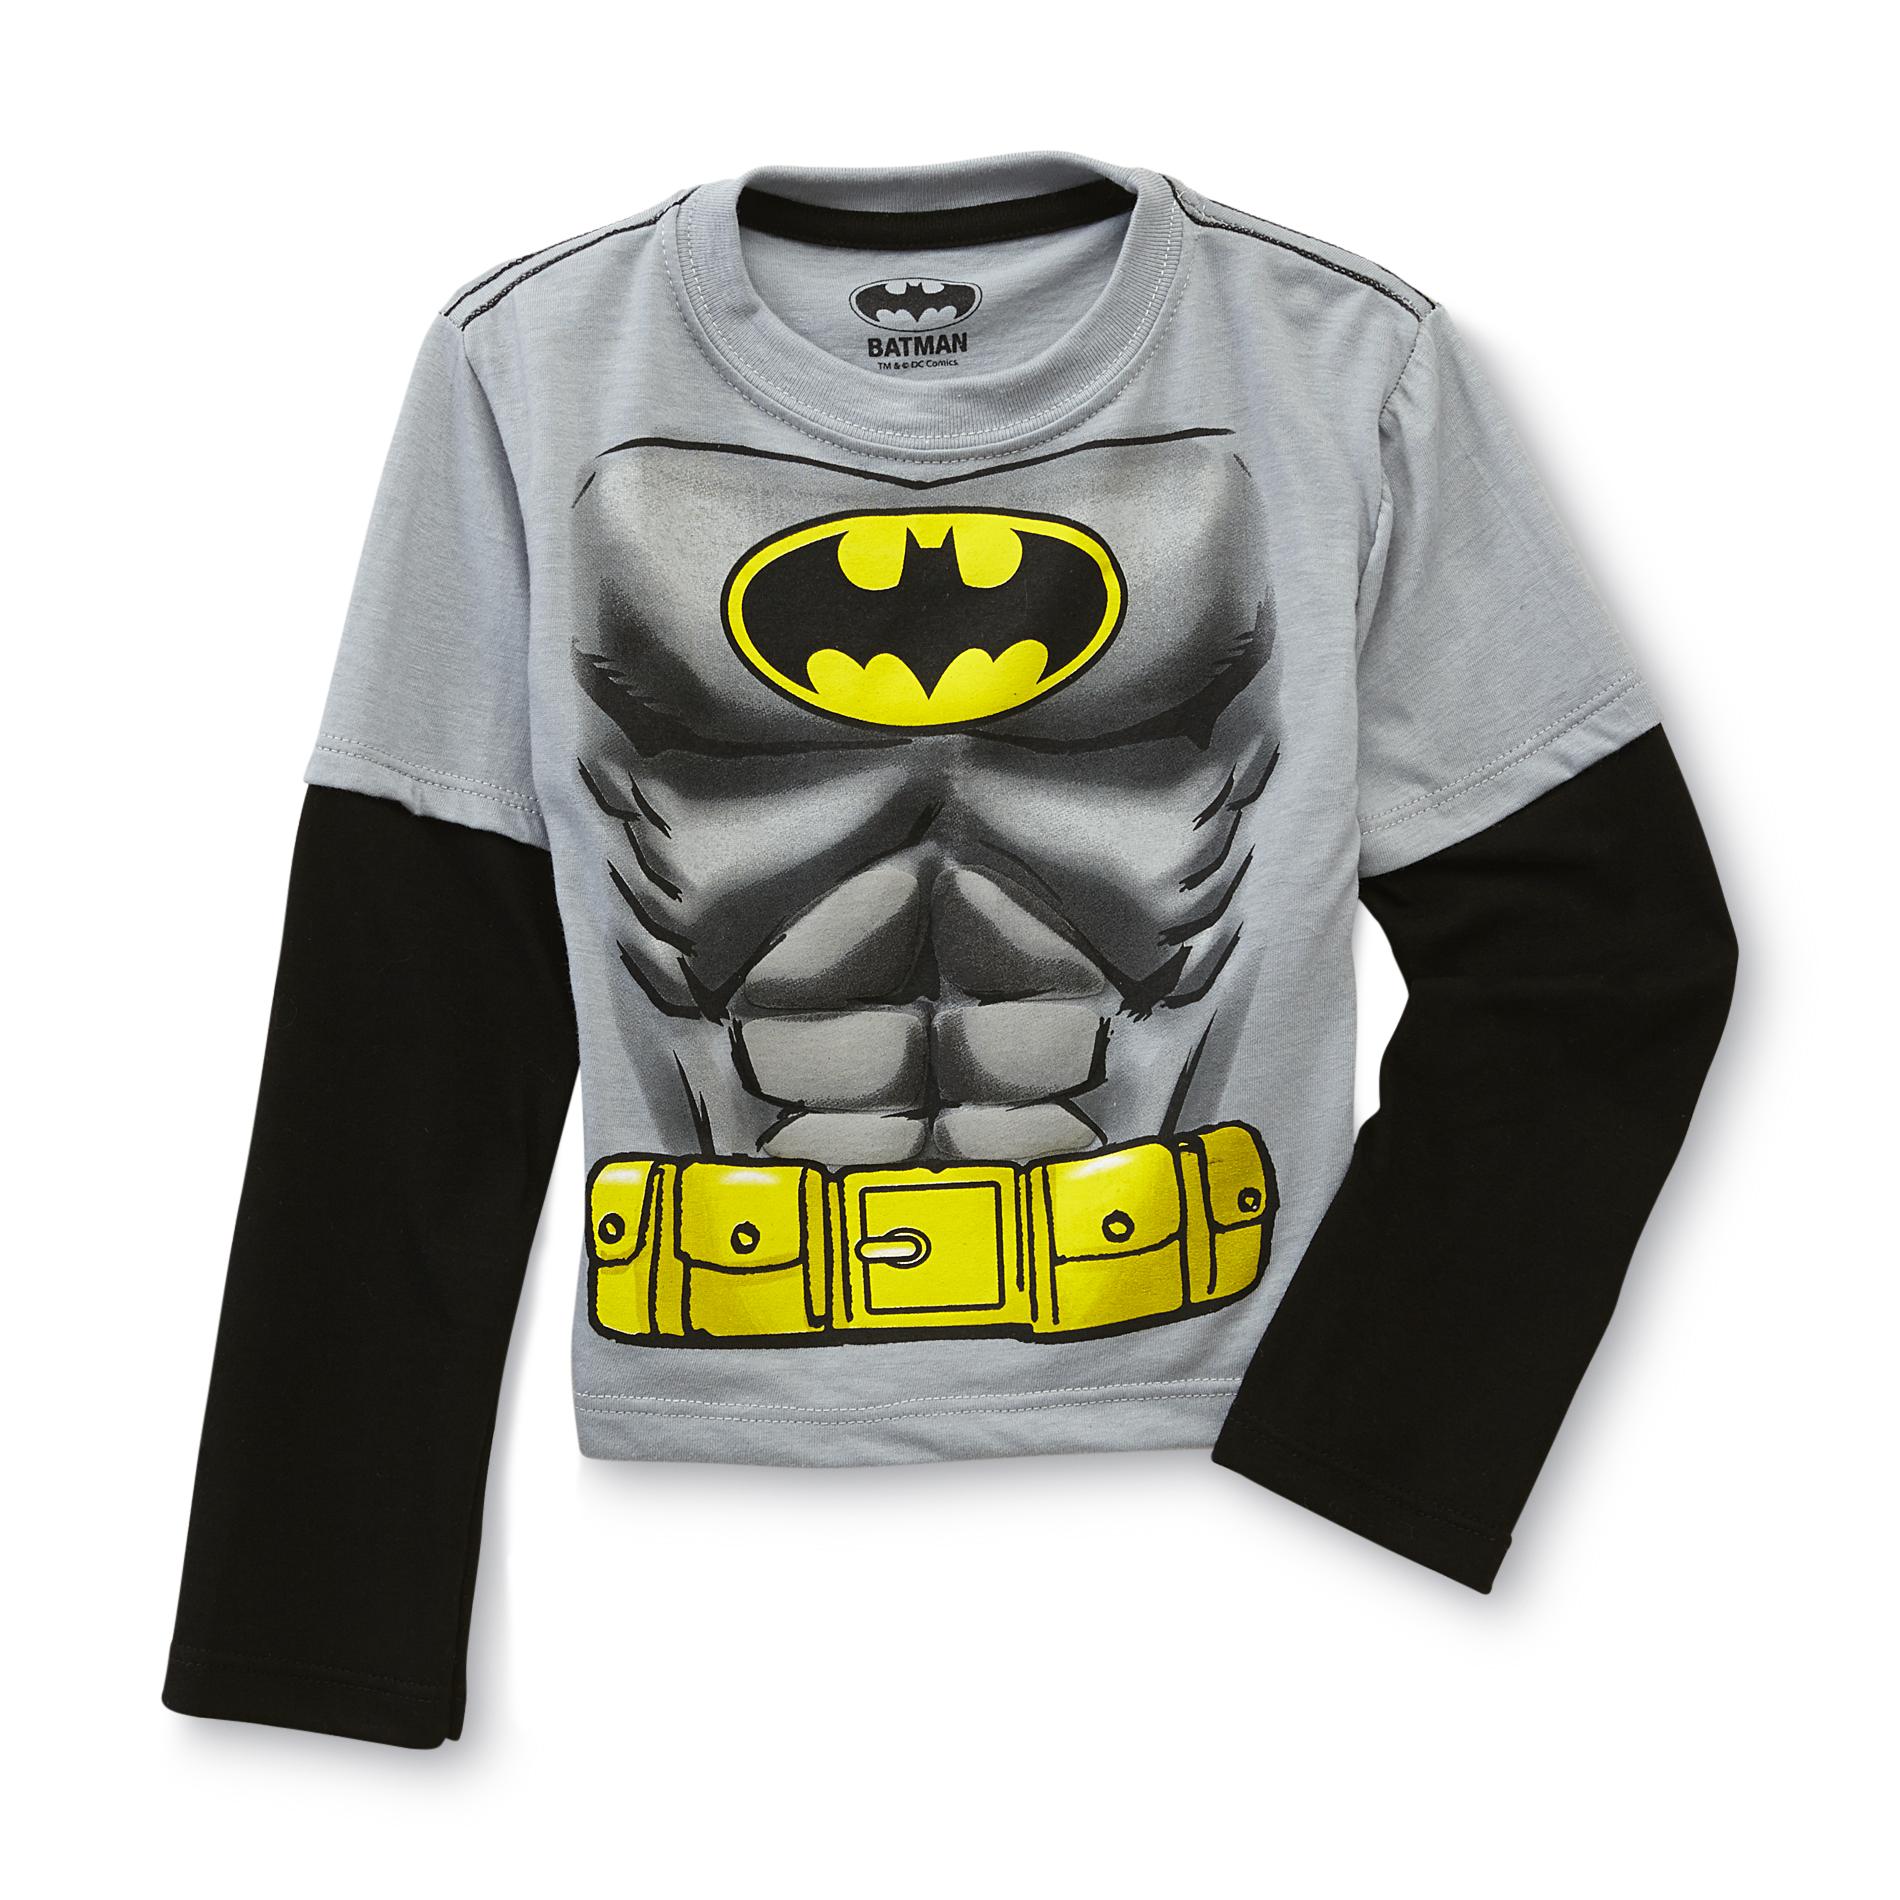 DC Comics Batman Toddler Boy's Long-Sleeve Graphic T-Shirt